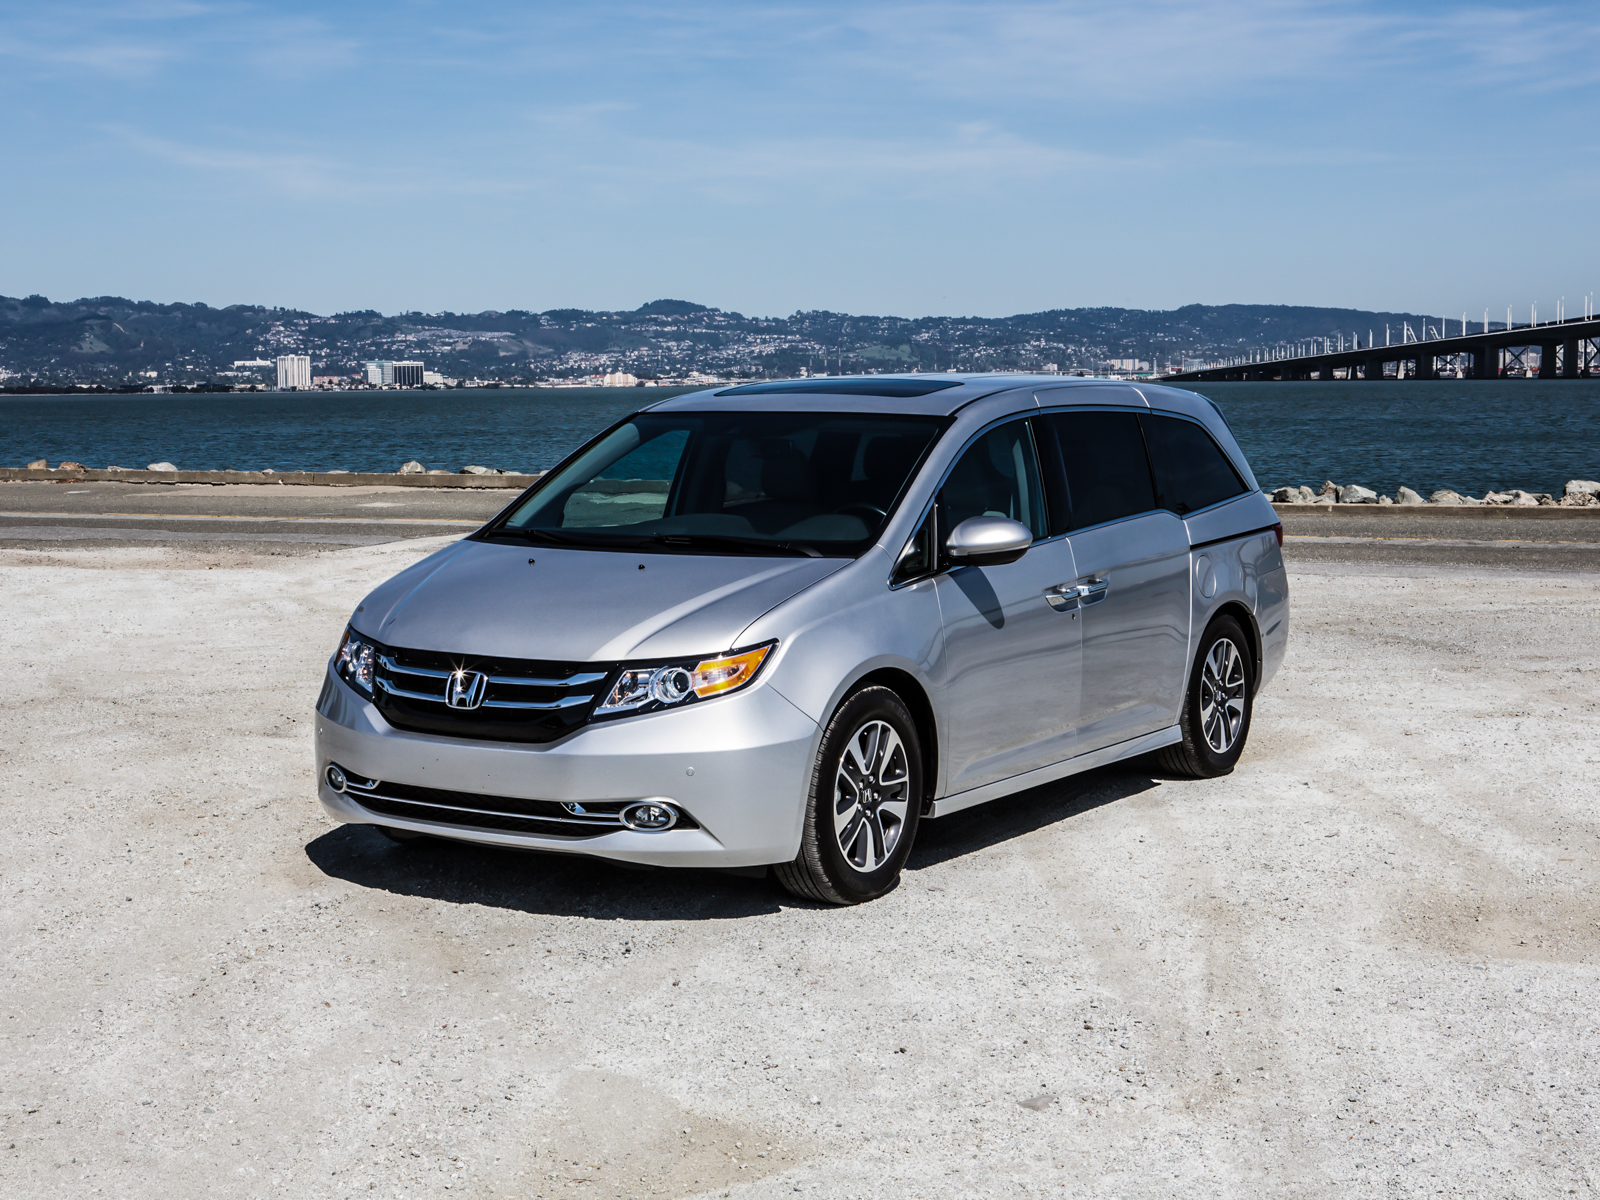 2014 Honda Odyssey review: Honda's easy 